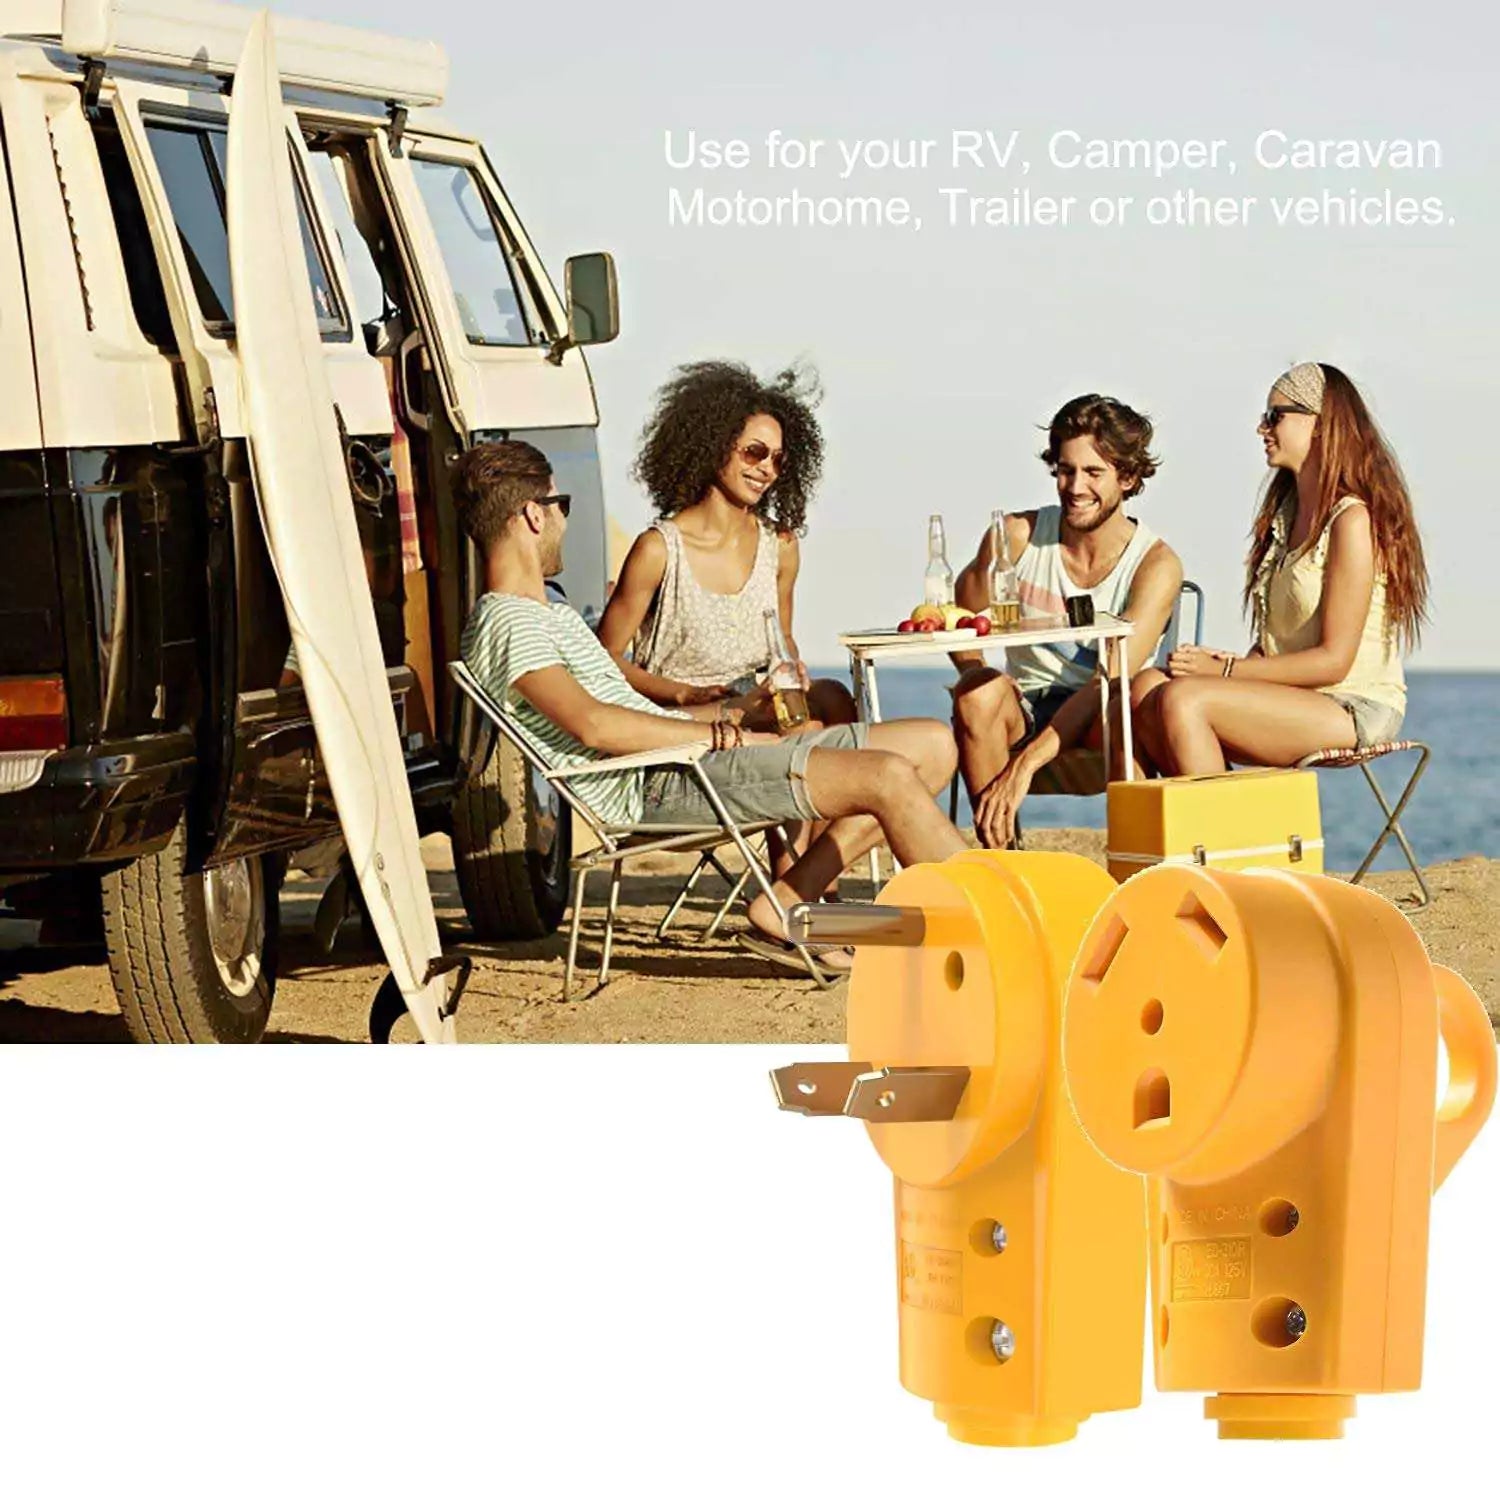 30 amp plug for a camper female use for RV, camper, caravan motorhome, trailer or other vehicles